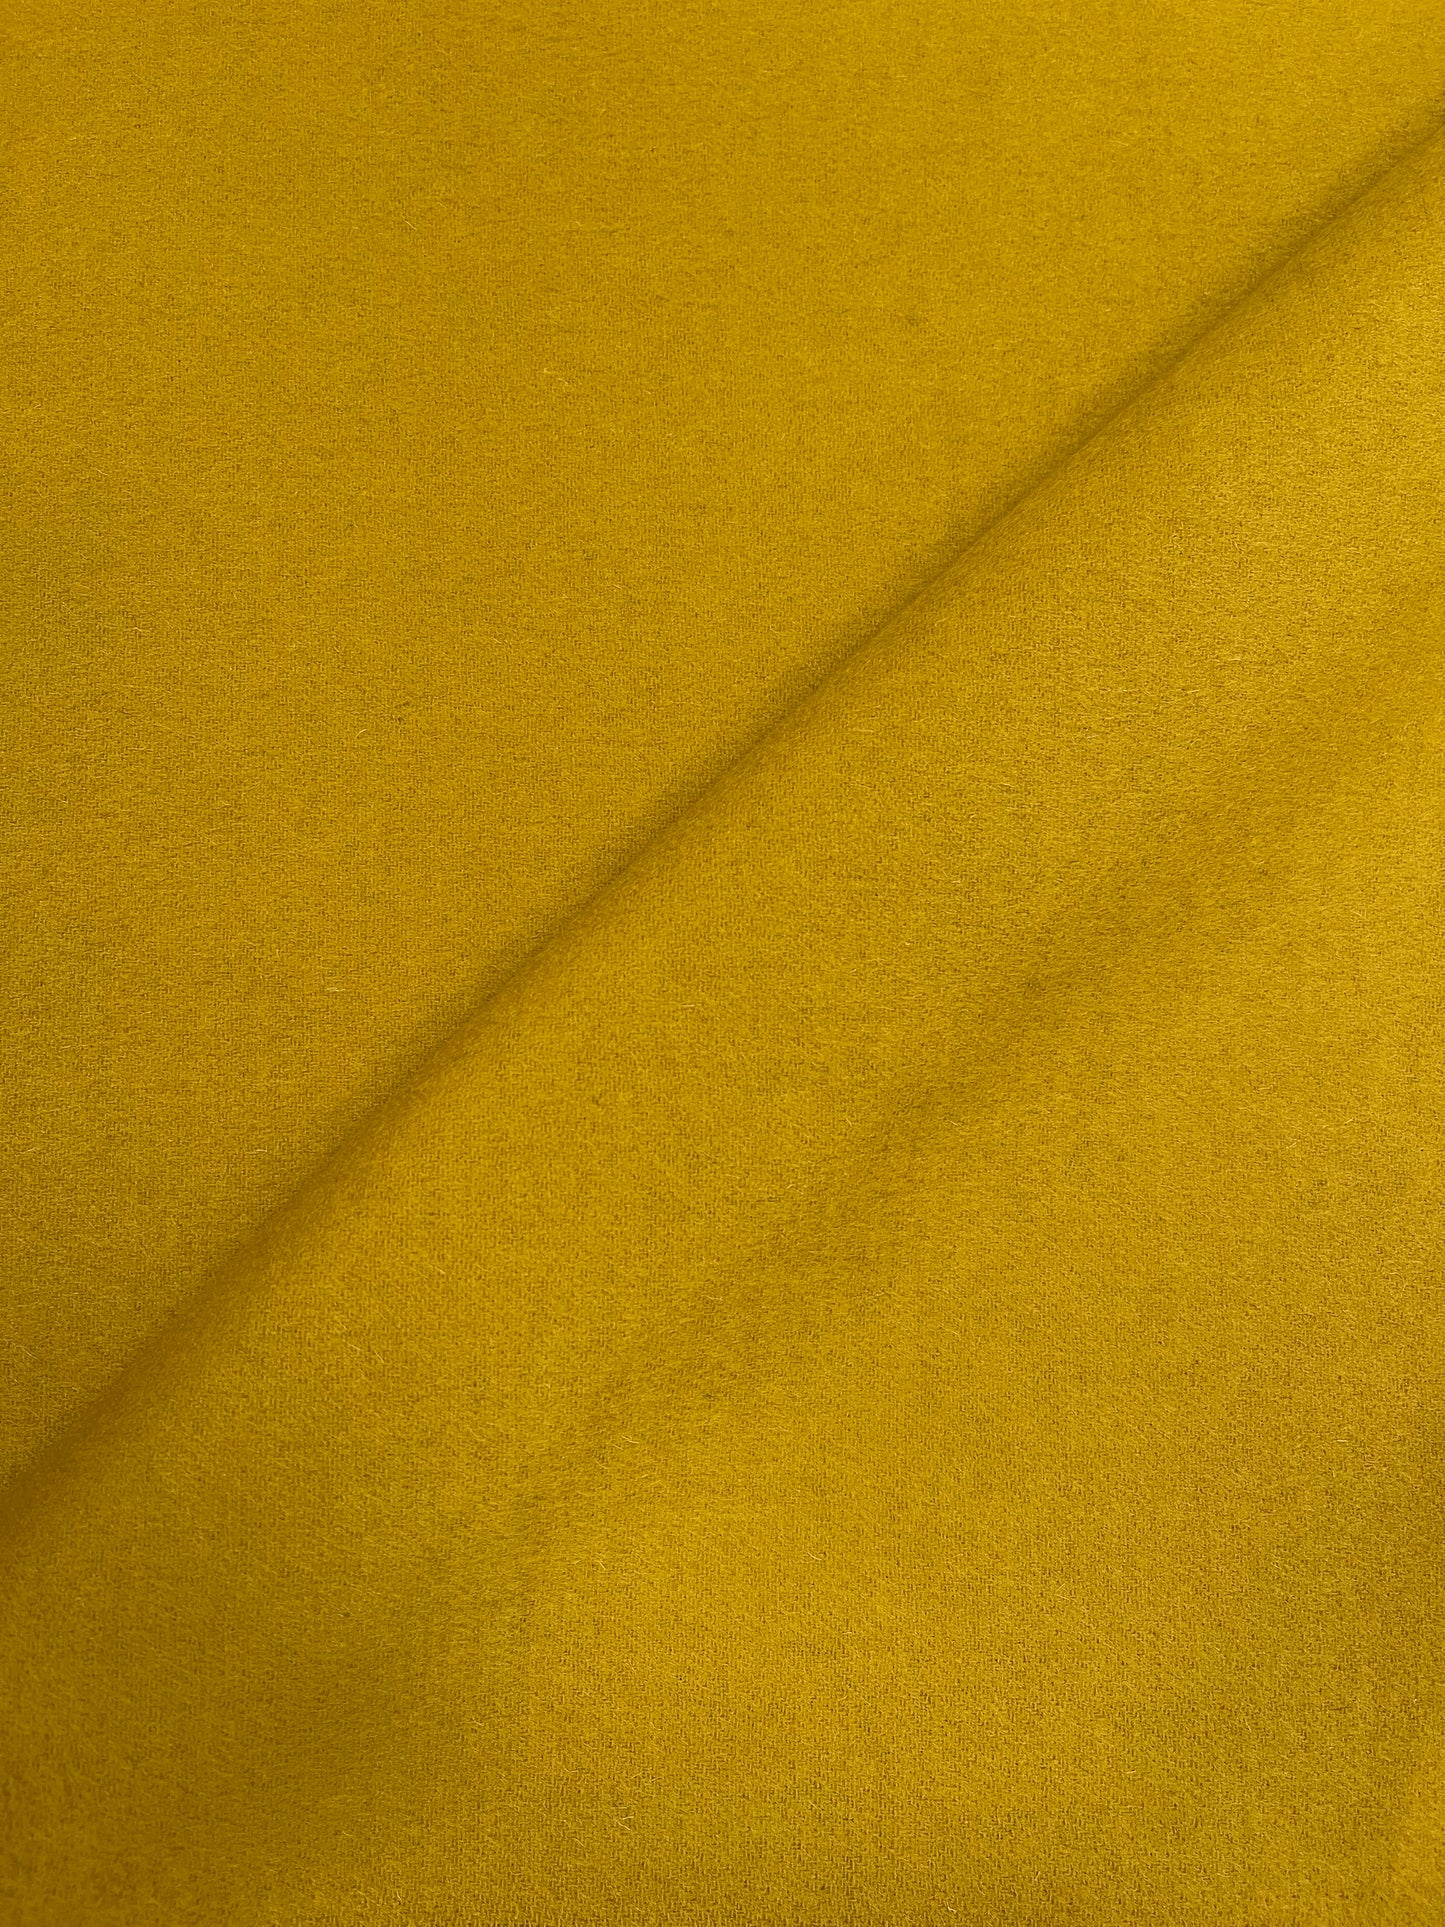 Splitable double face wool olive green oker yellow